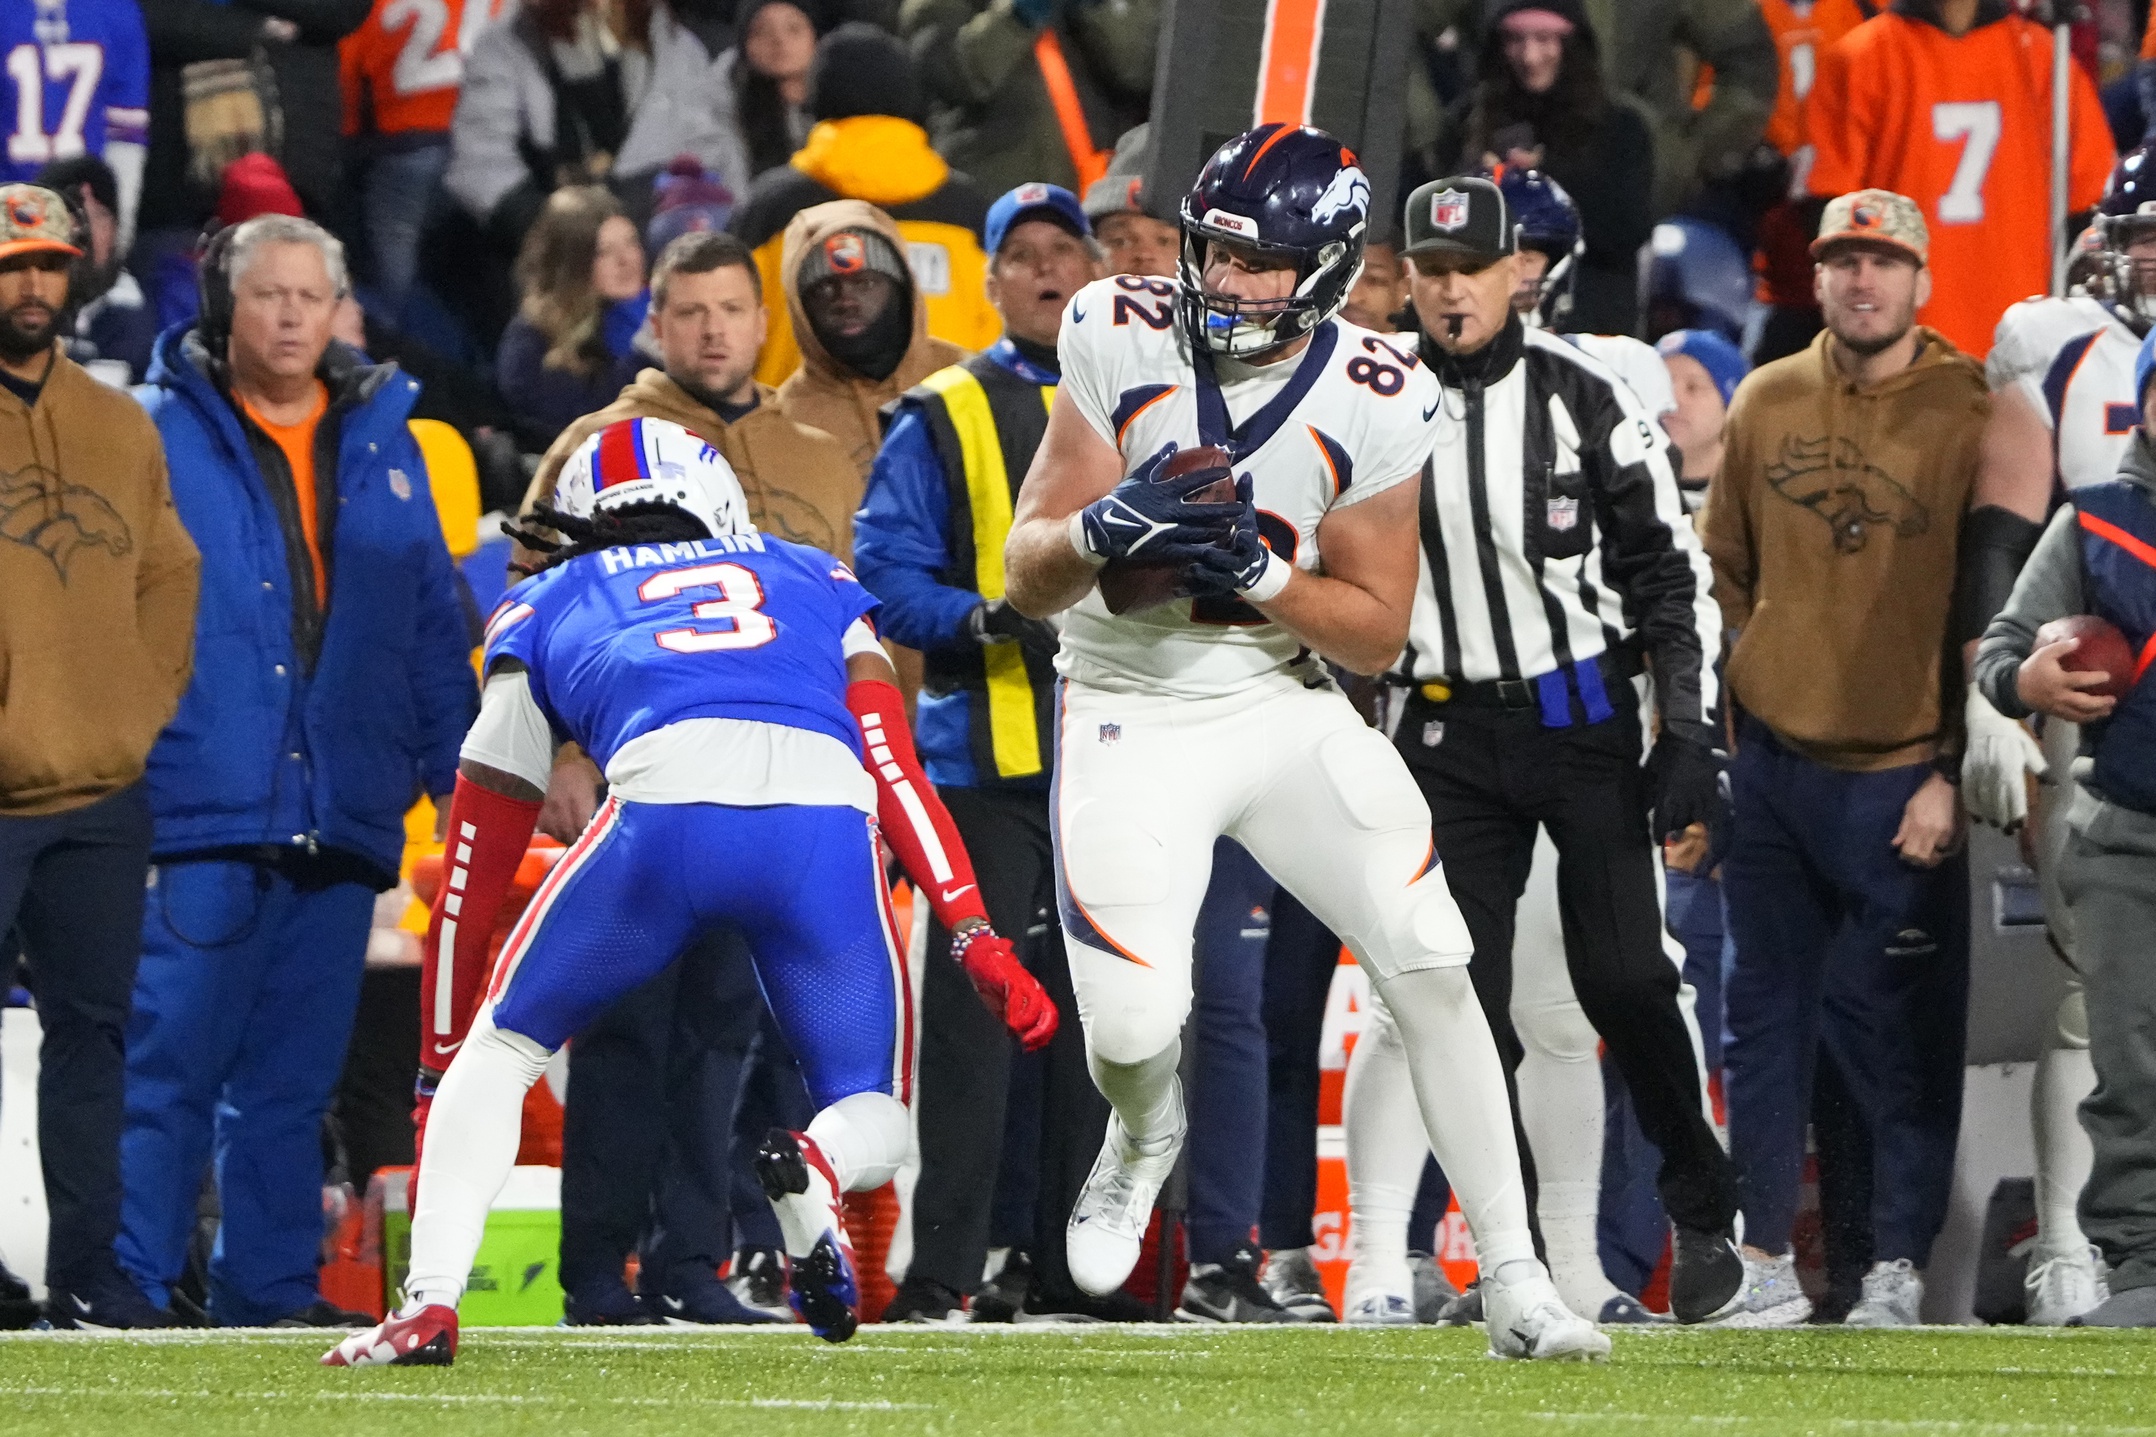 Denver Broncos tight end Adam Trautman (82) makes a catch against Buffalo Bills safety Damar Hamlin (3) during the second half at Highmark Stadium.